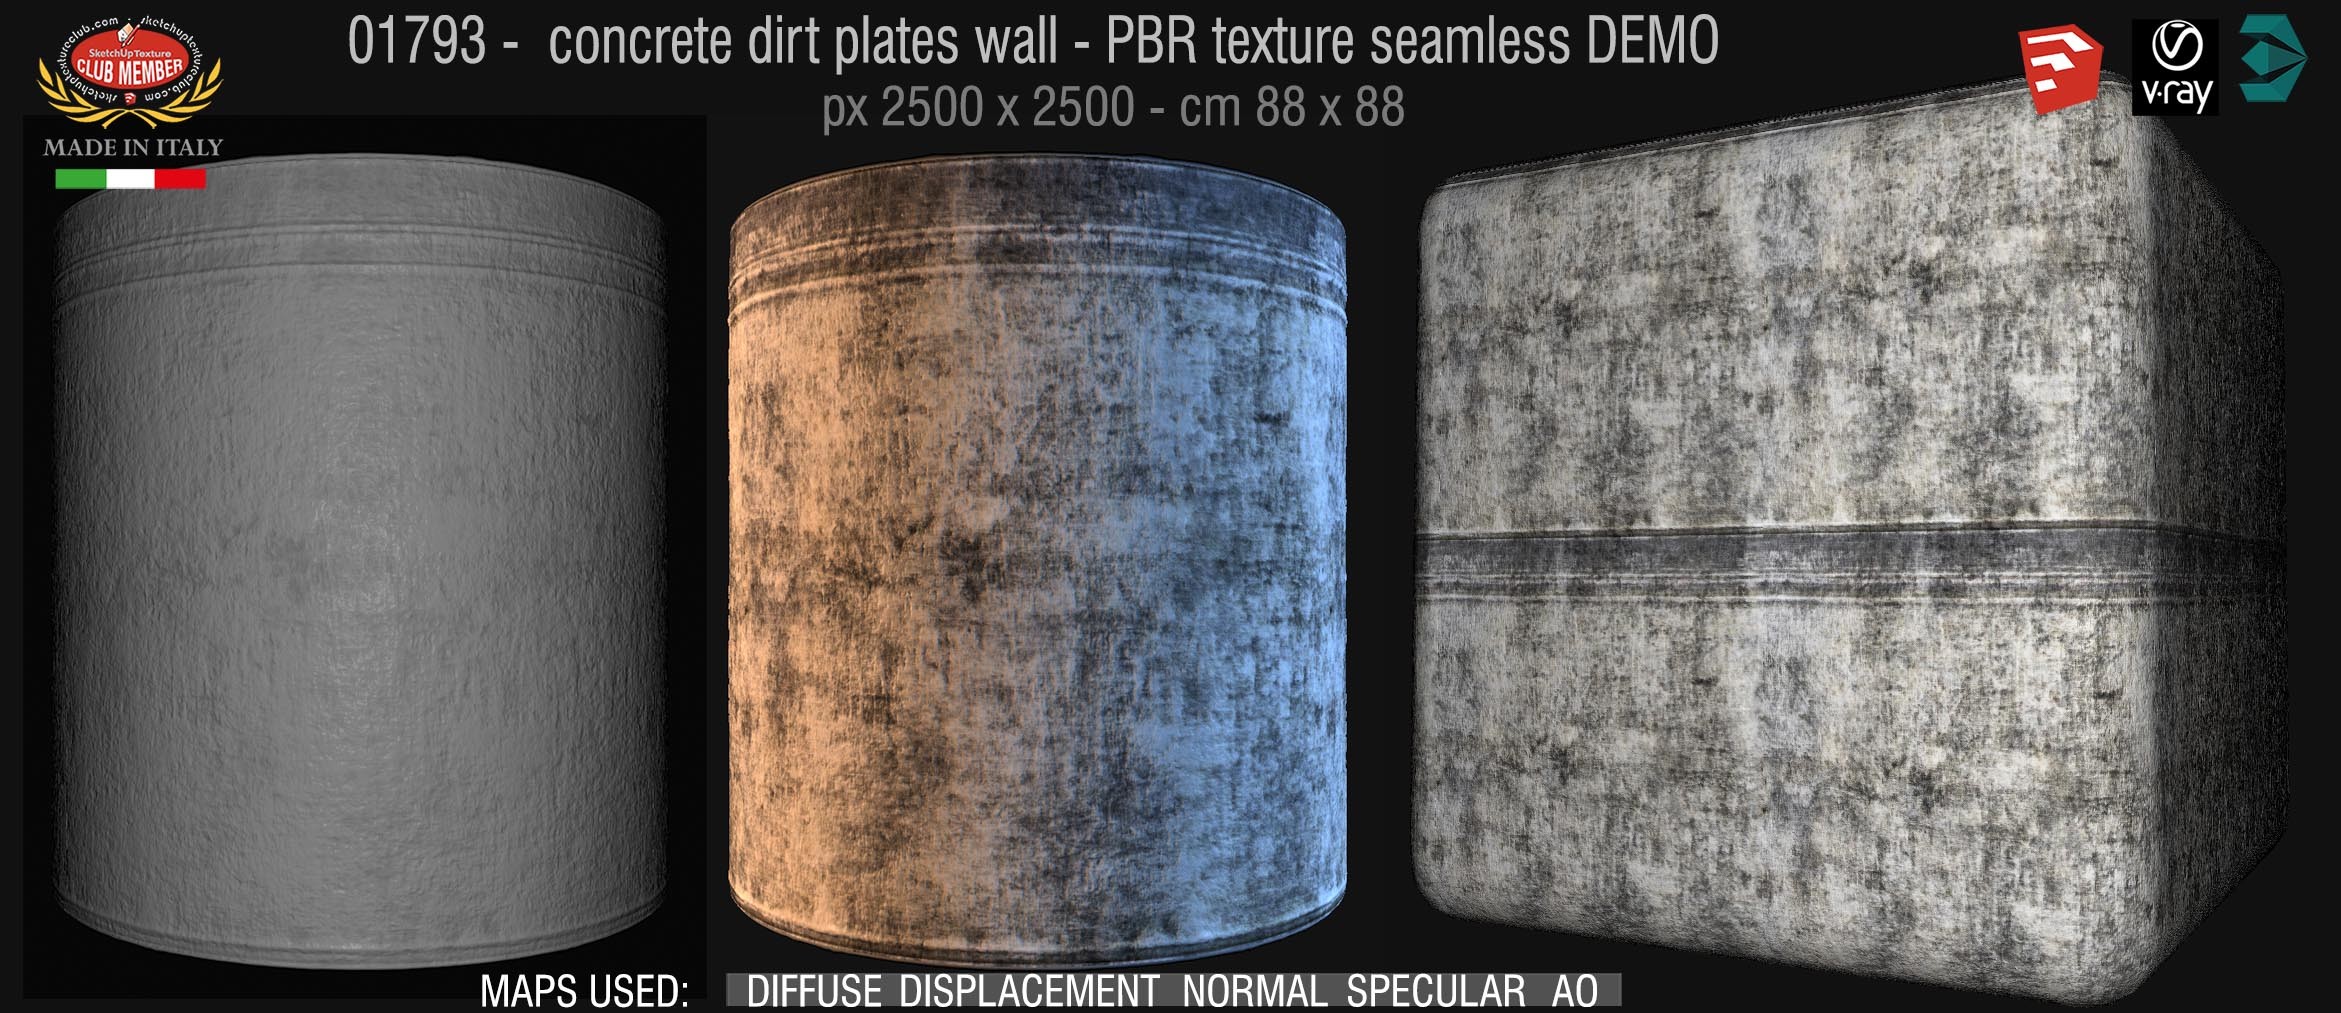 01793 concrete dirt plates wall PBR texture seamless DEMO